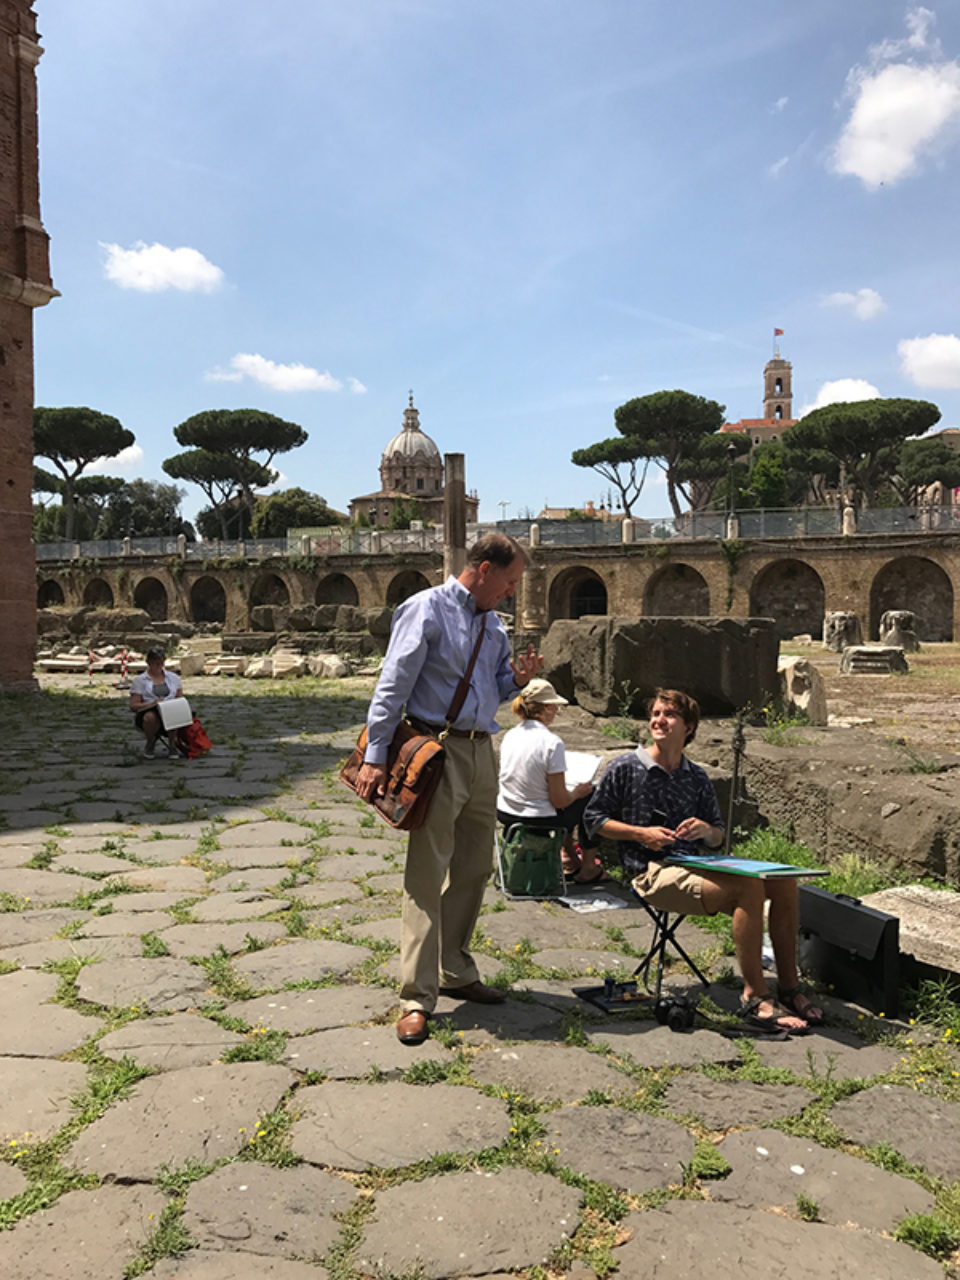 Tour participants sketch on location at Trajan's Market